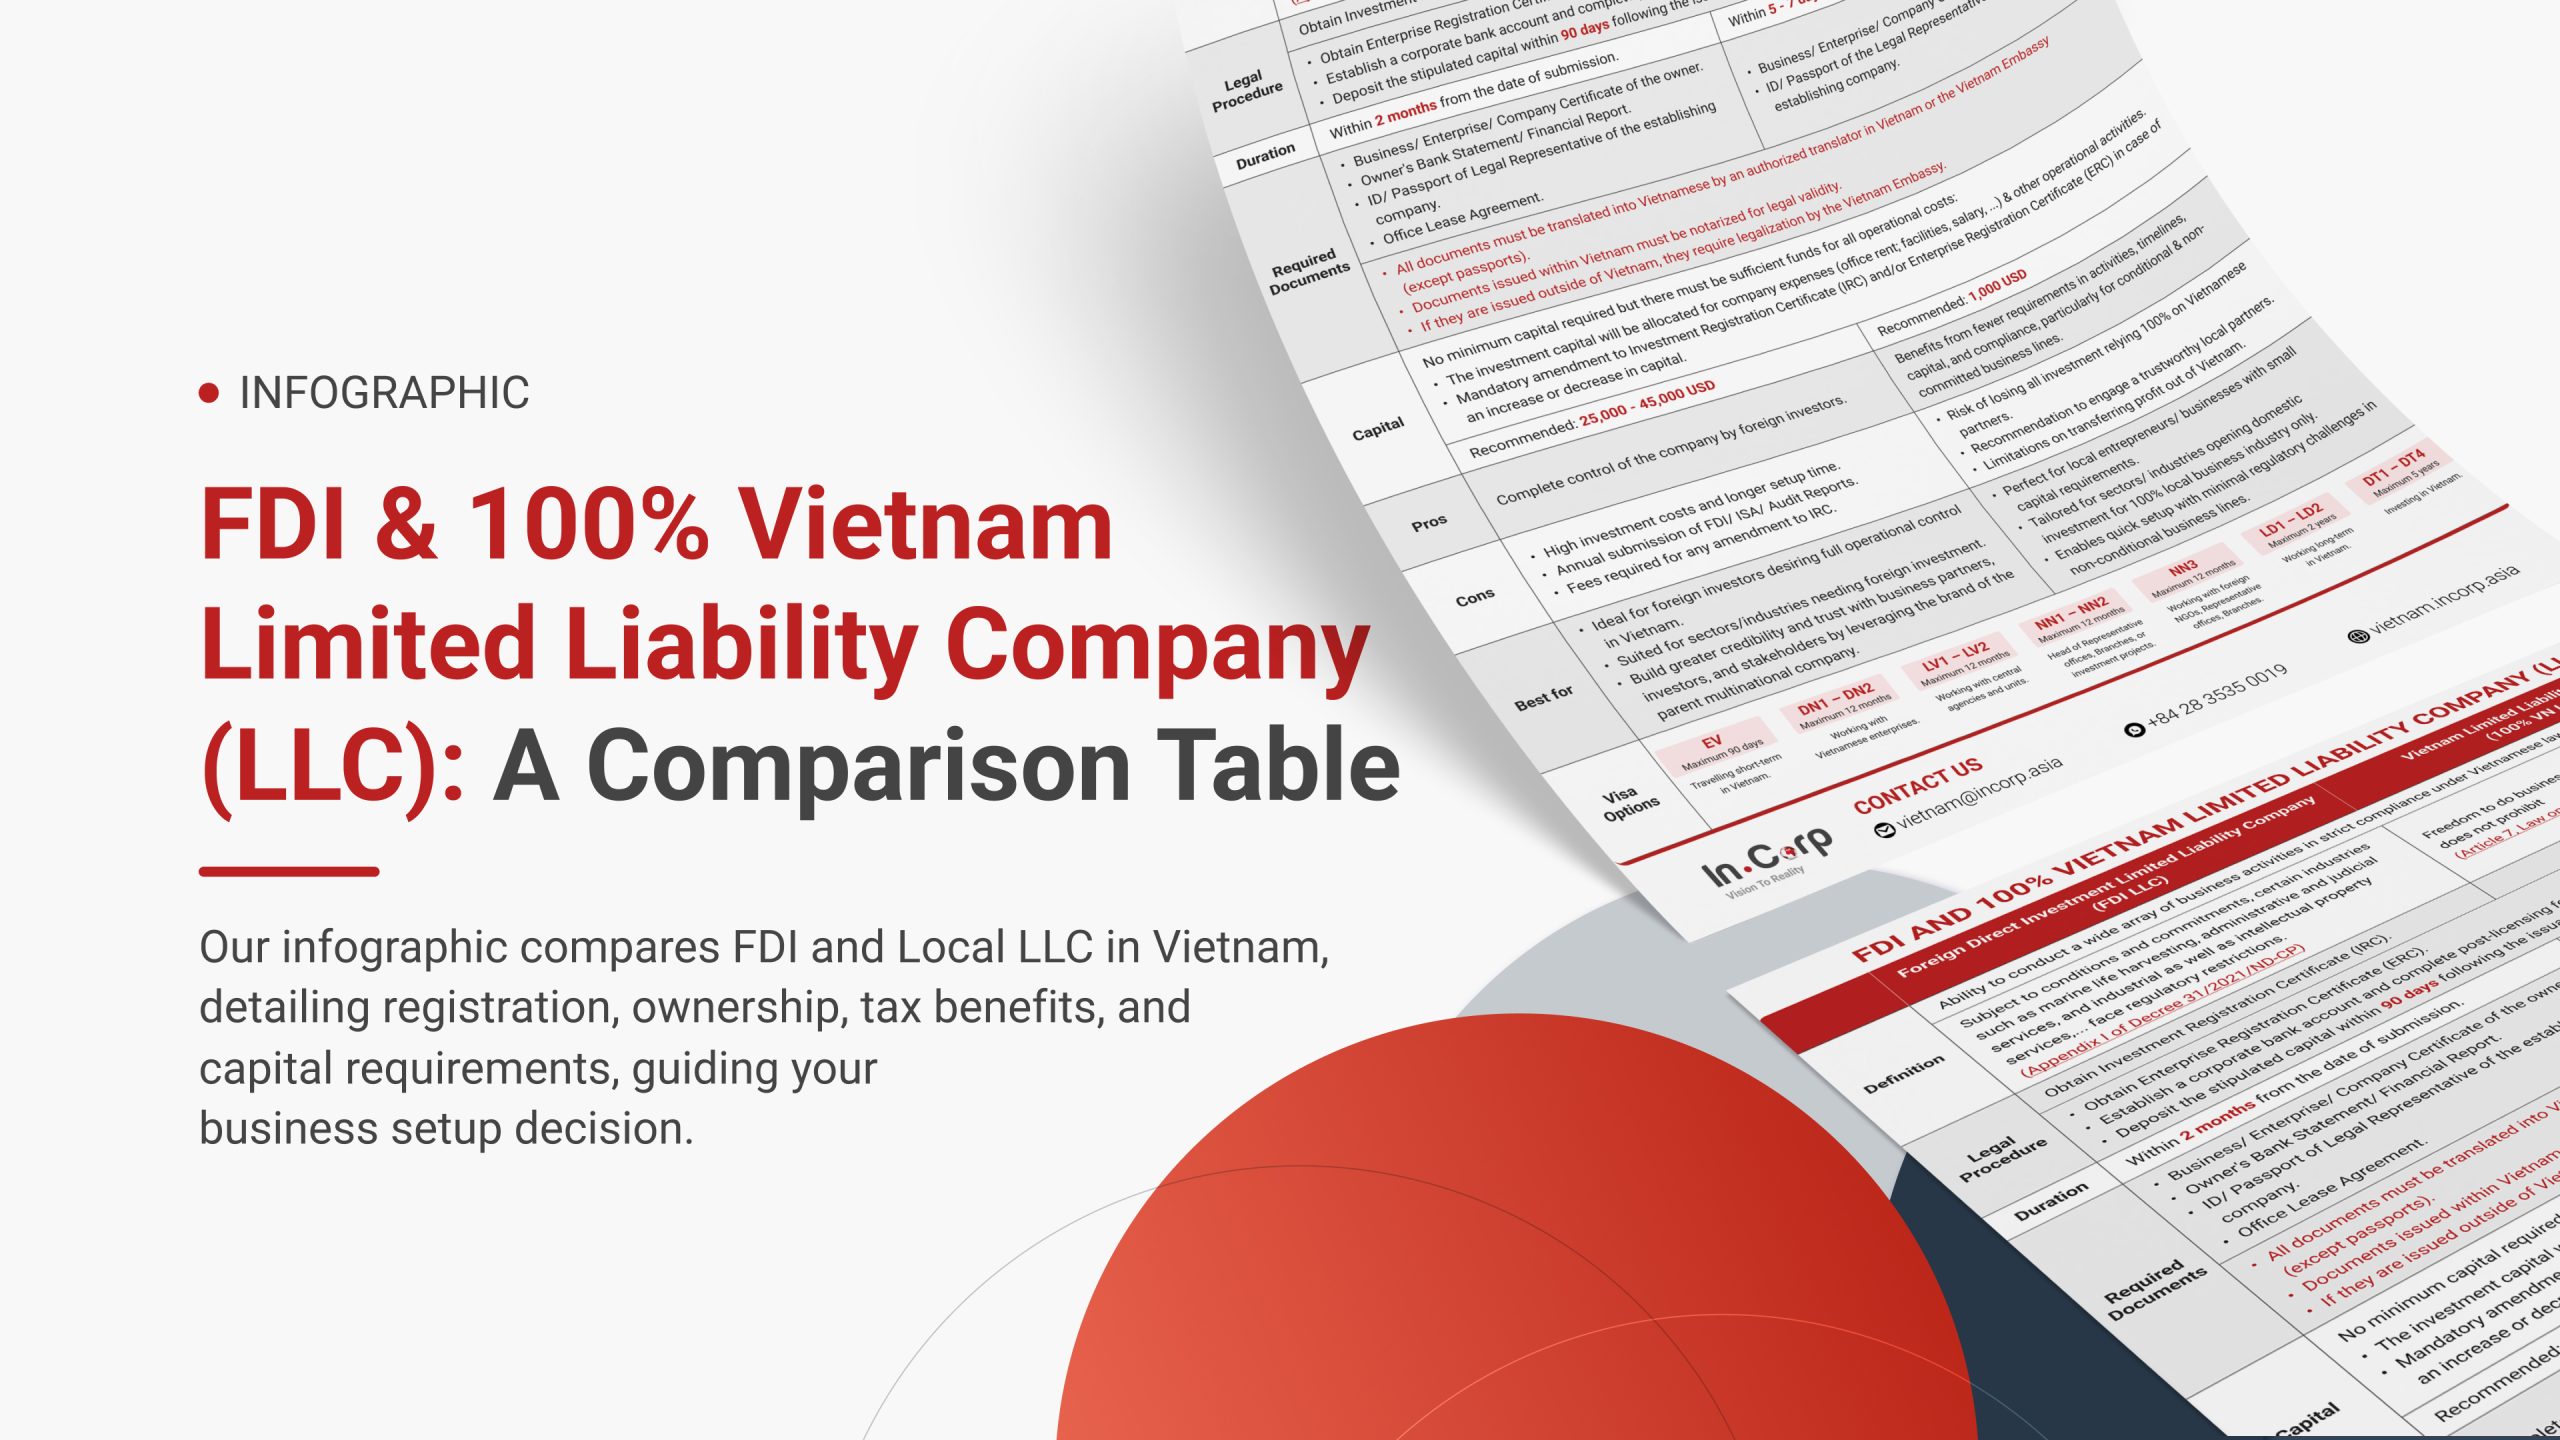 FDI and 100% Vietnam Limited Liability Company (LLC)